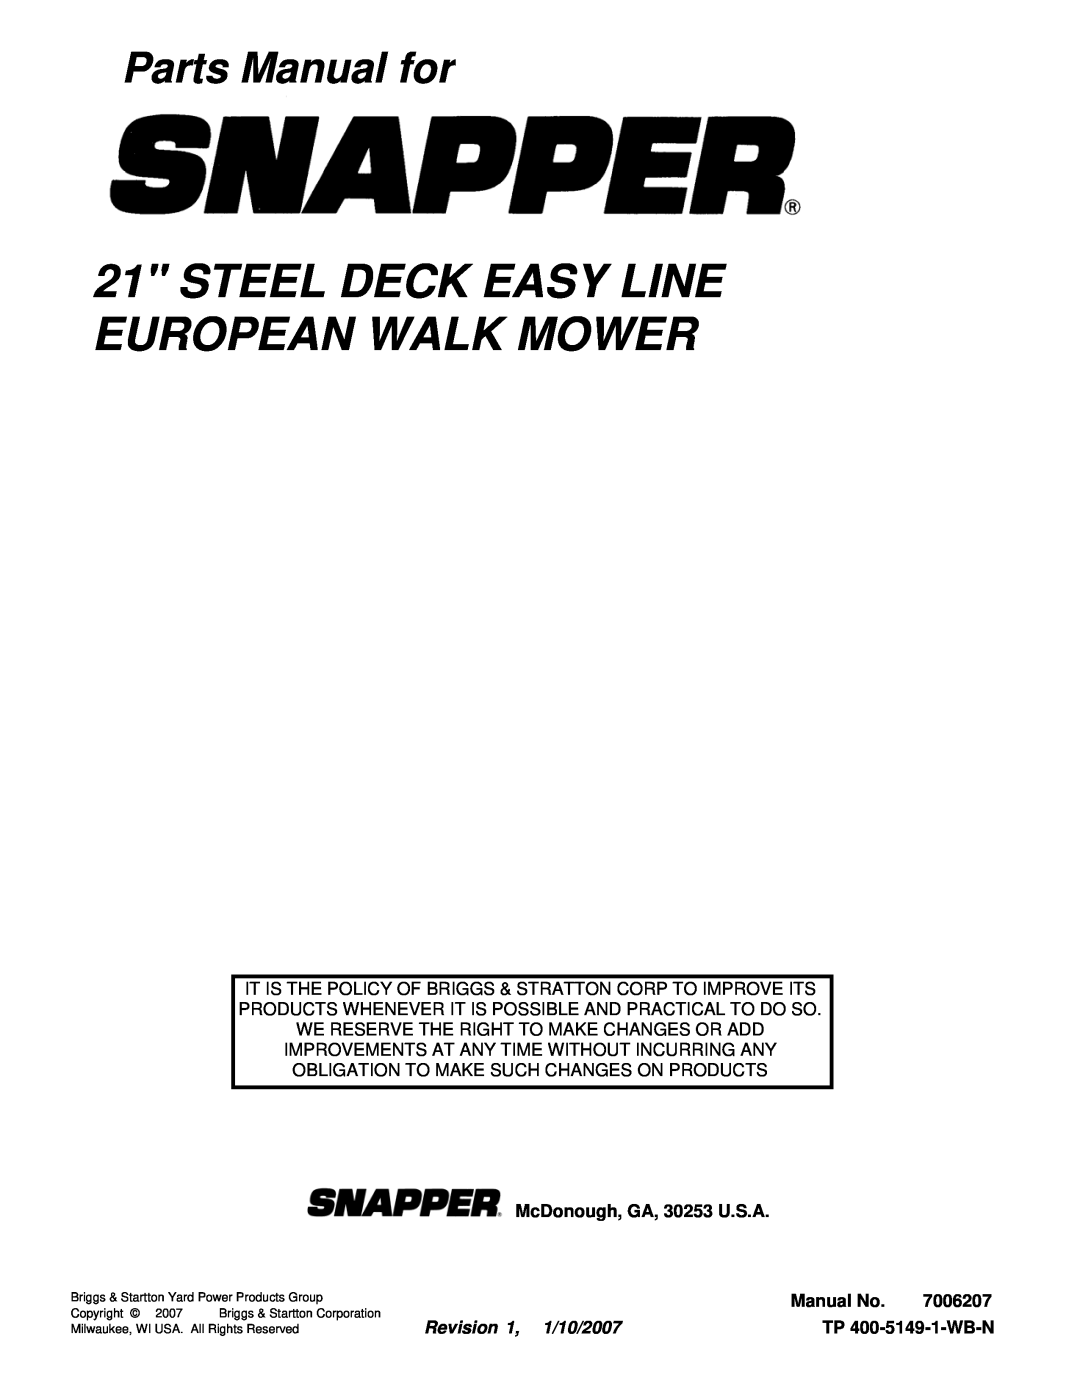 Snapper ESPV211 Steel Deck Easy Line European Walk Mower, Parts Manual for, McDonough, GA, 30253 U.S.A, Manual No, 7006207 